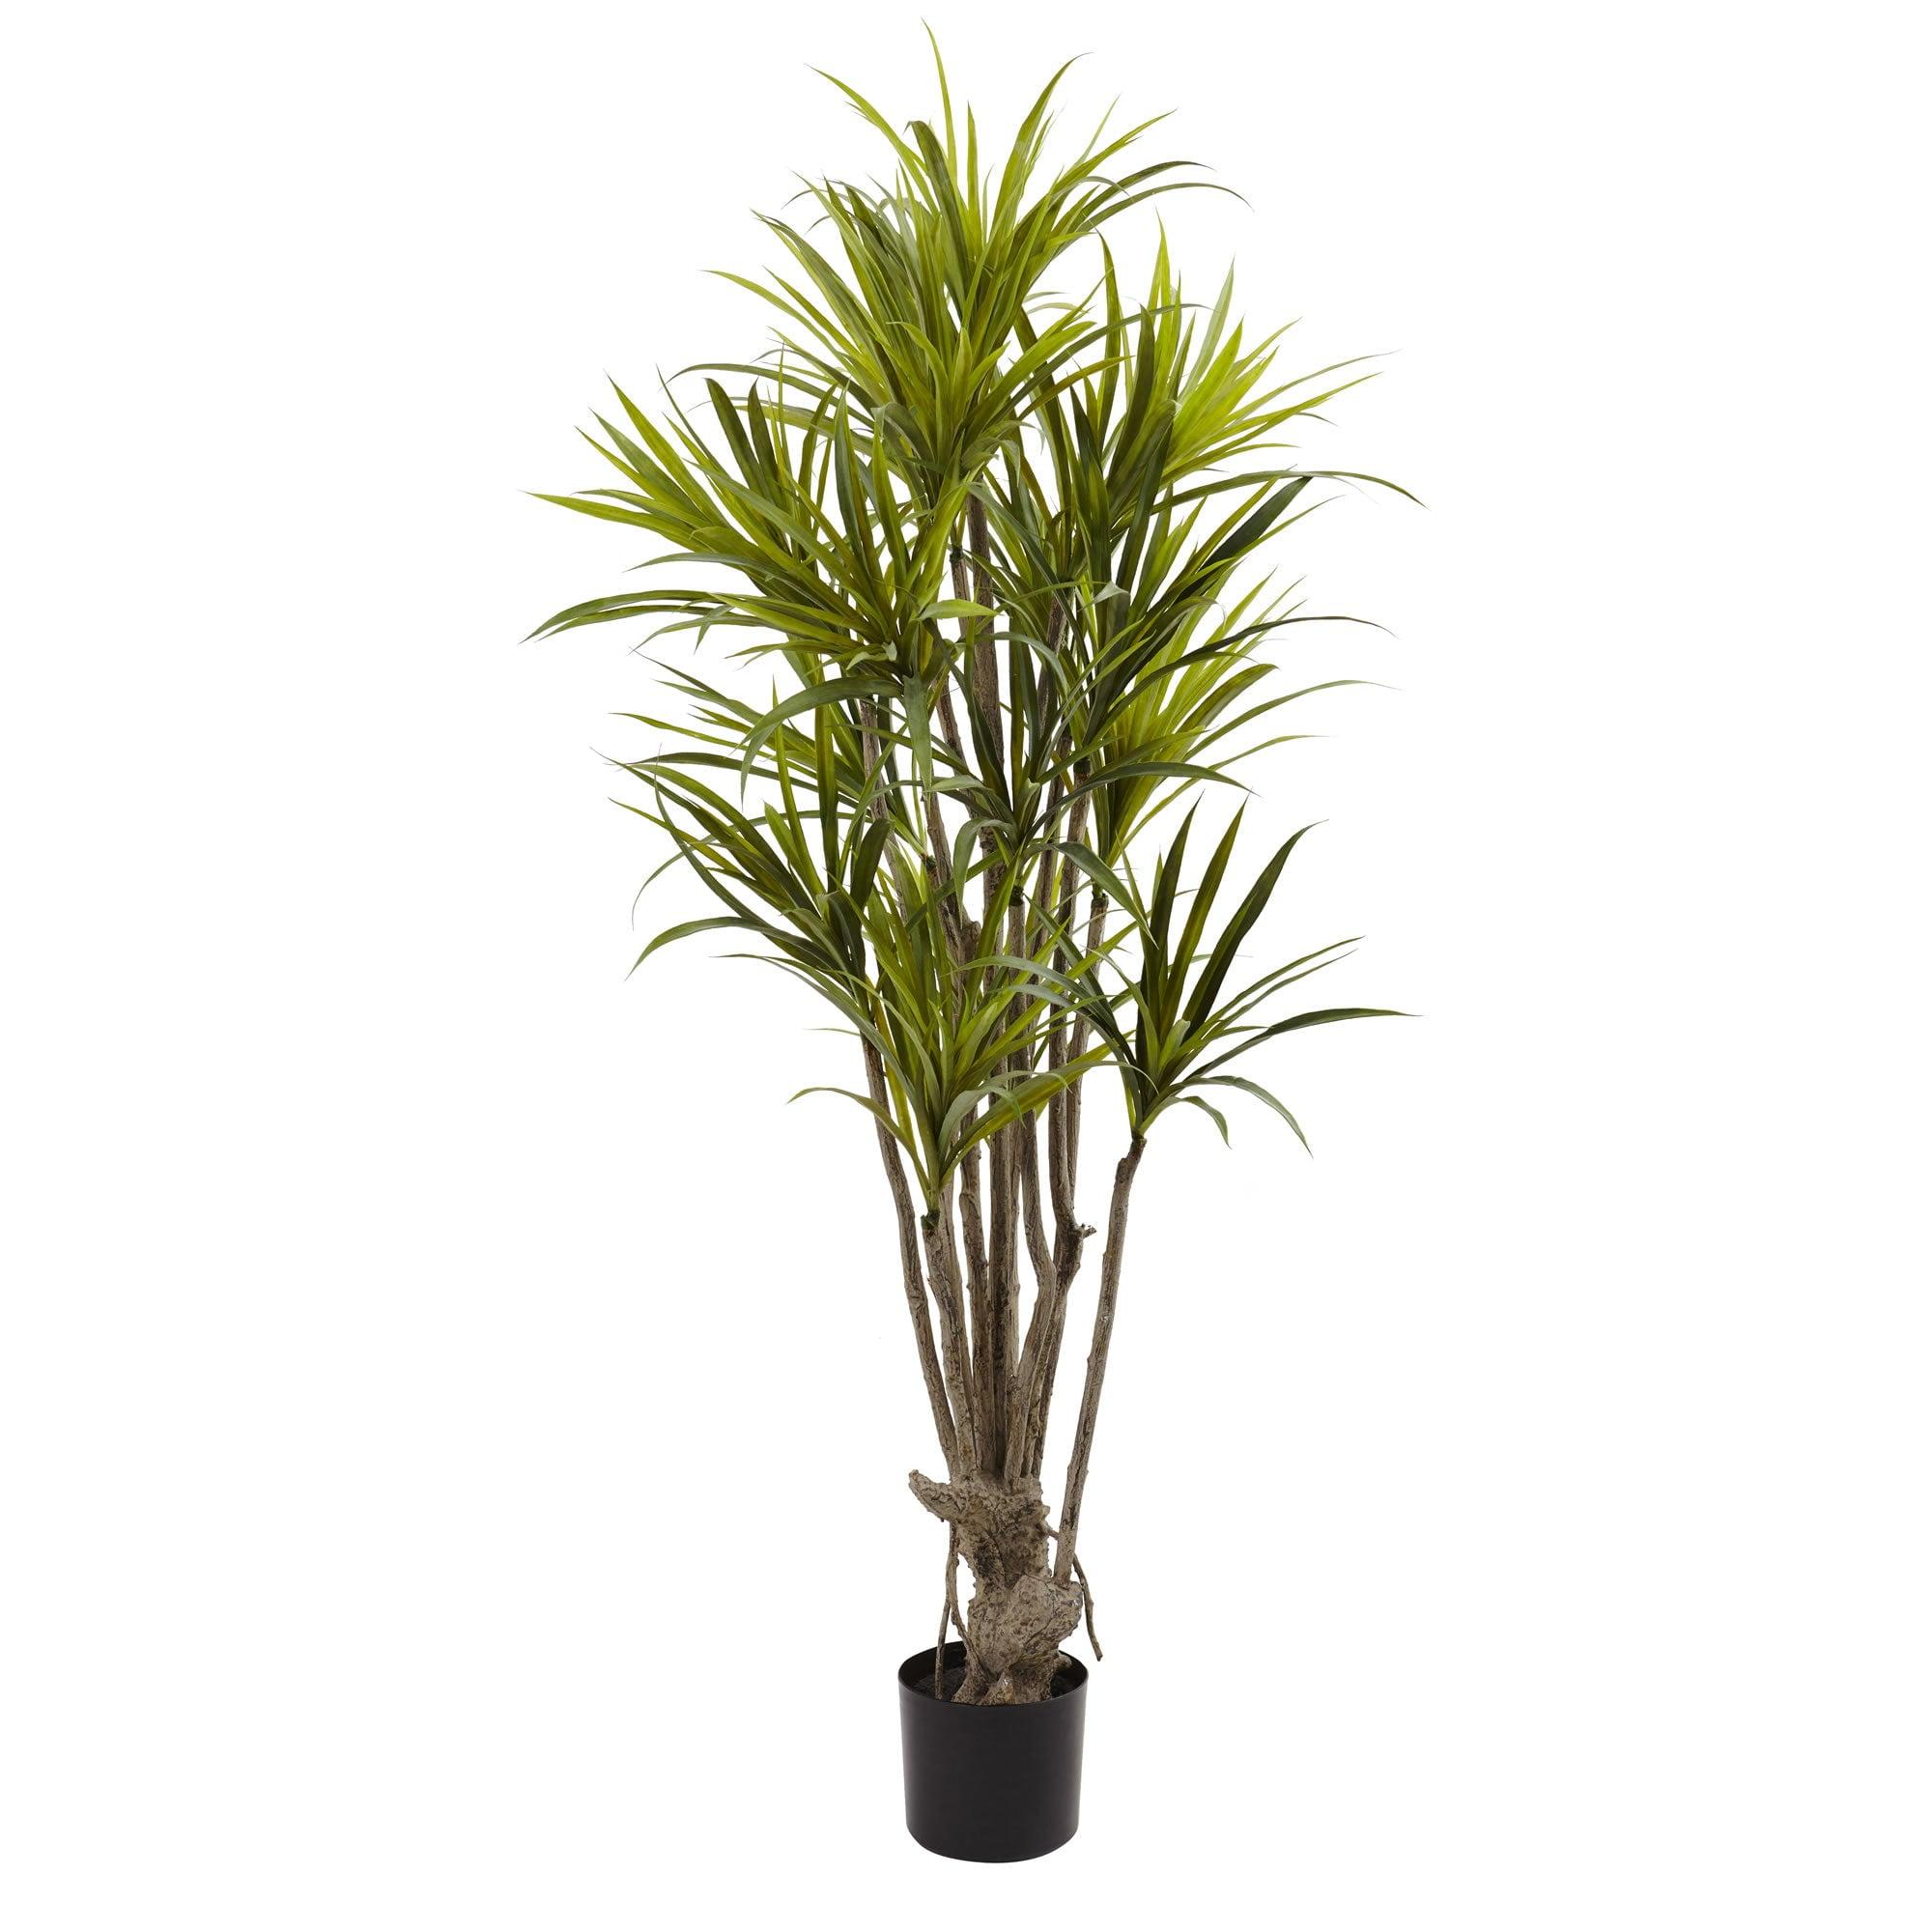 Tropical Dracaena Silk Tree in Plastic Pot - 63" High